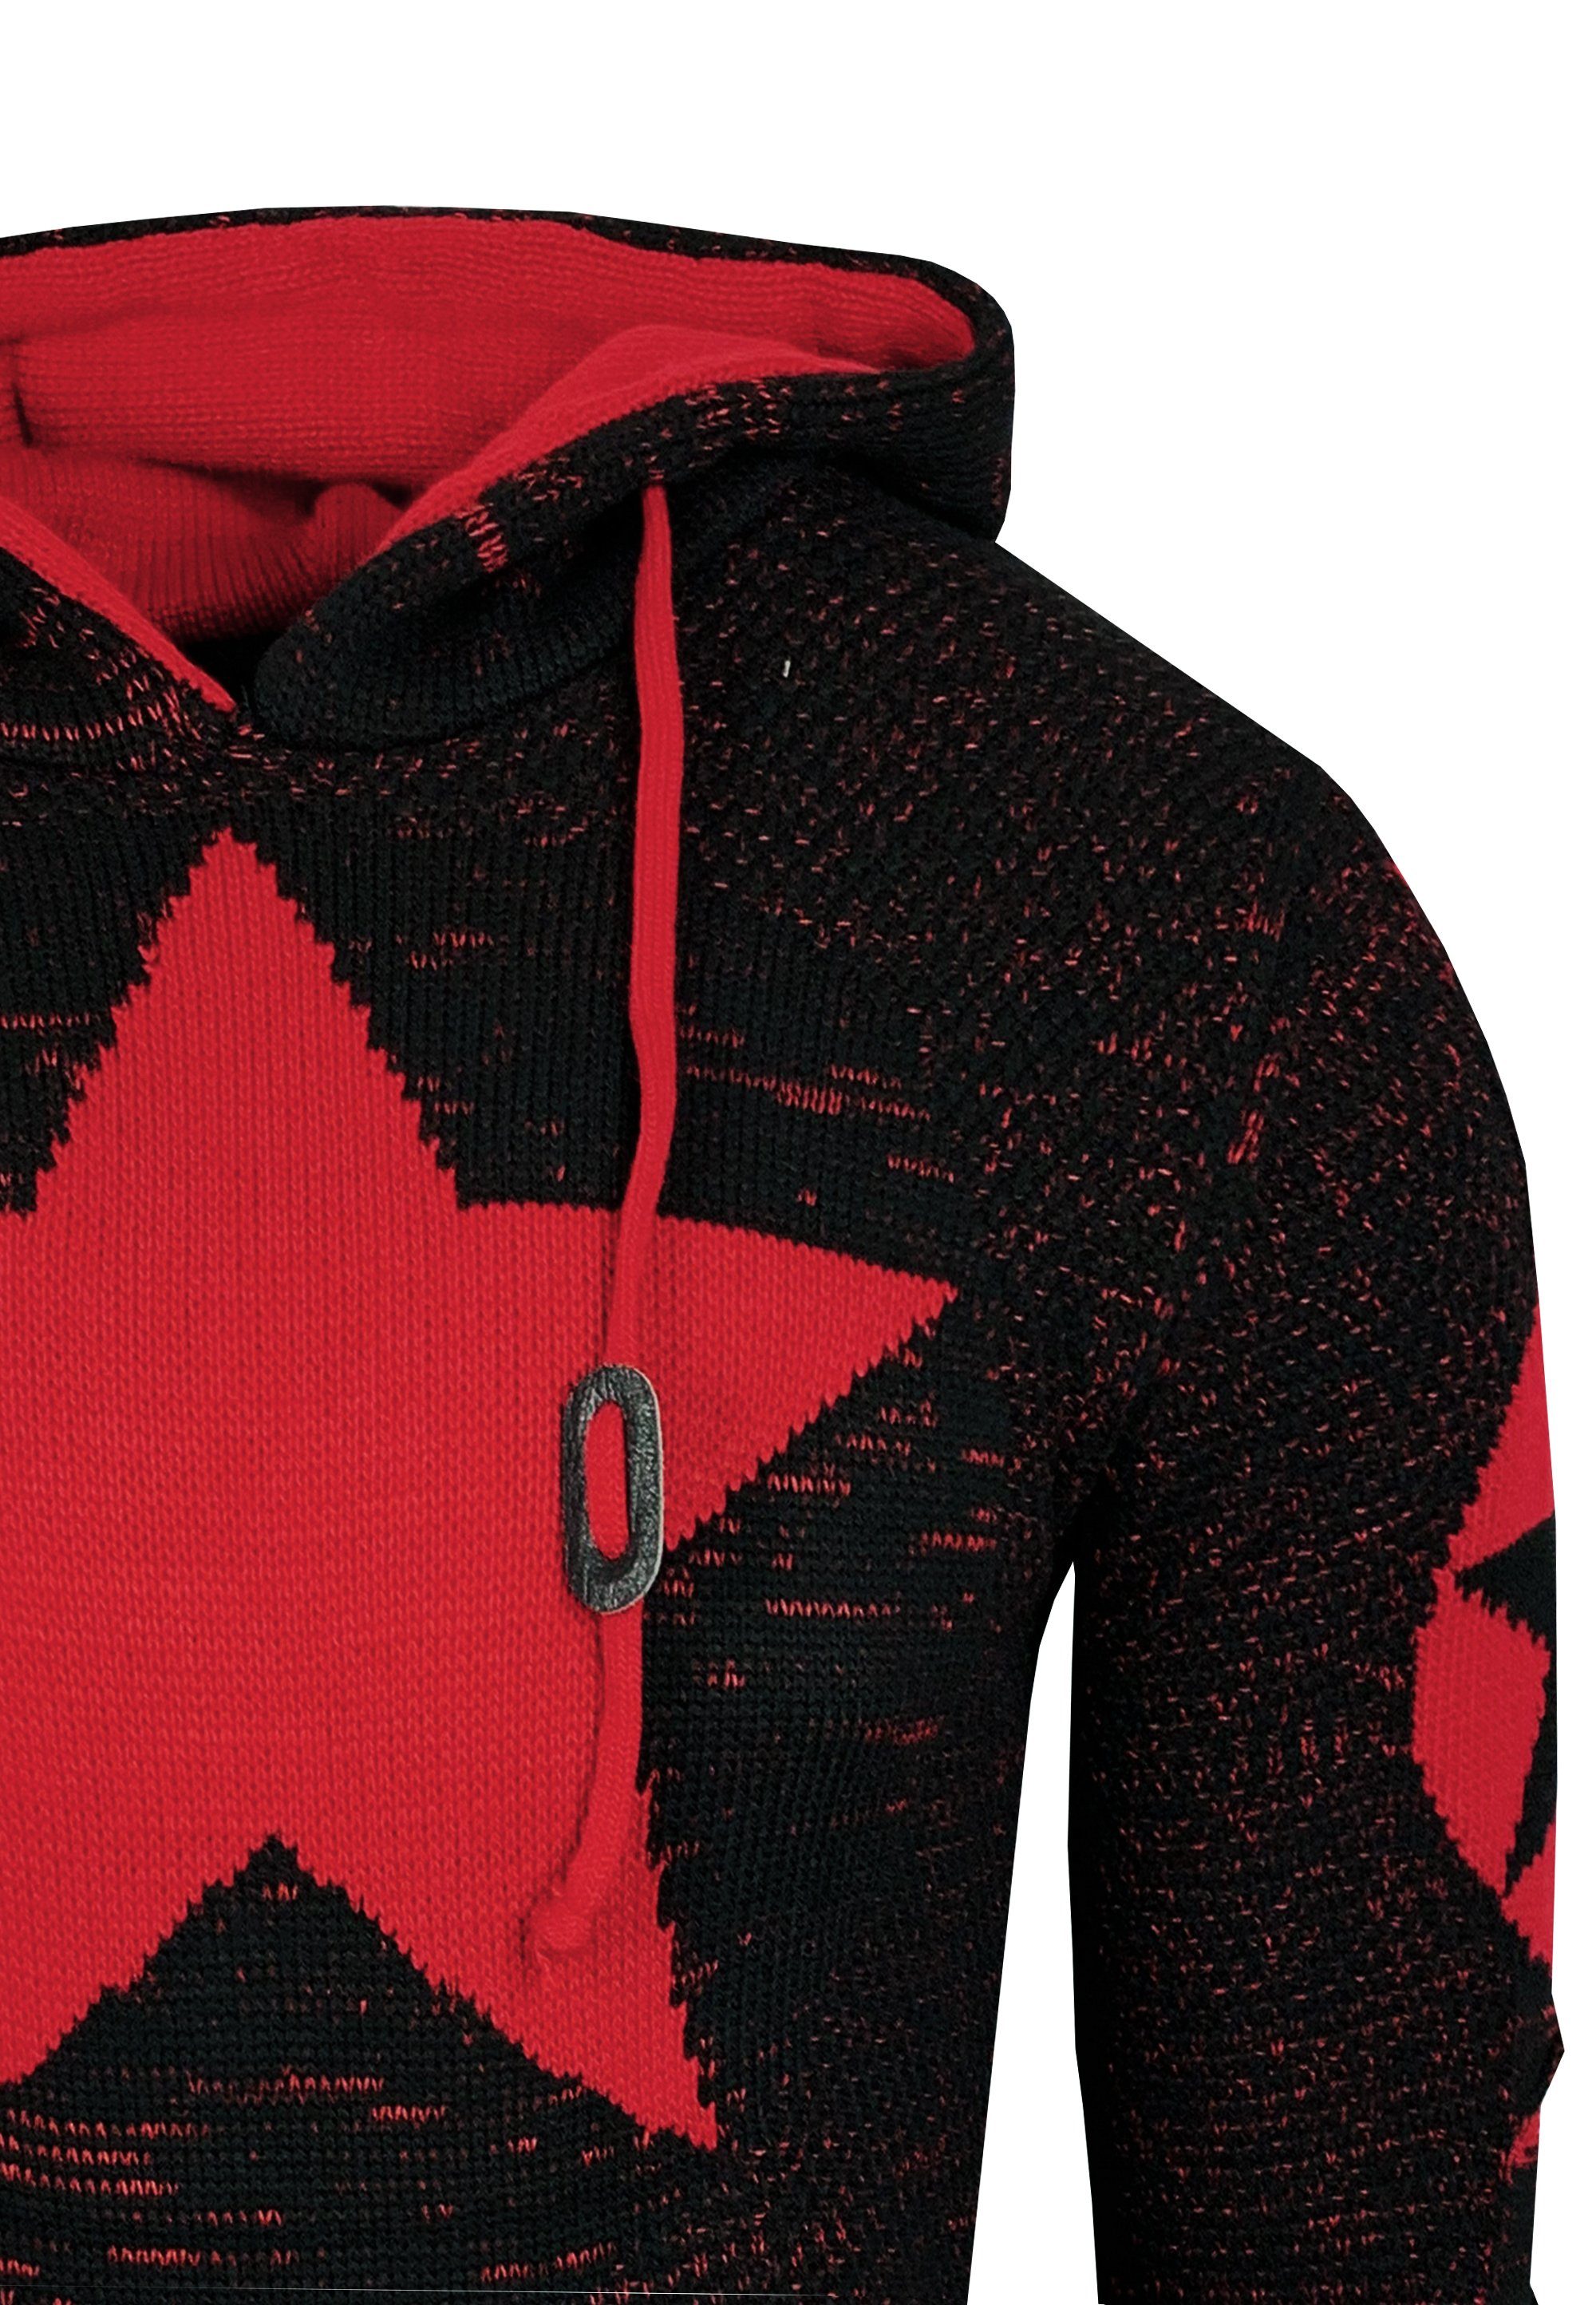 Kapuzensweatshirt mit Stern-Design Rusty schwarz-rot Neal großem